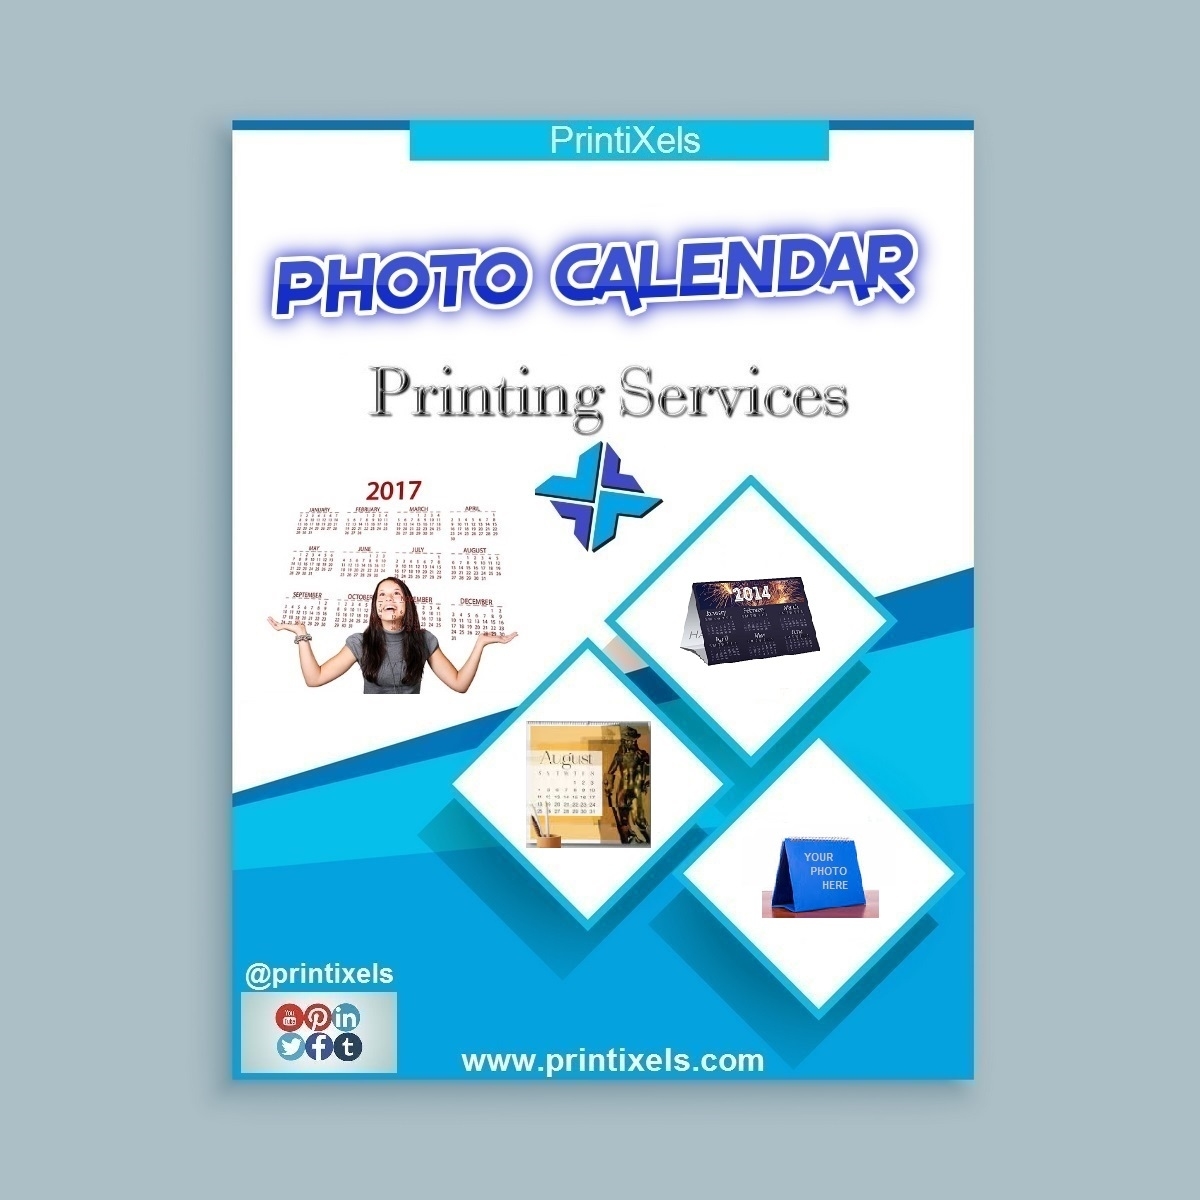 Photo Calendar Printing Services | Printixels™ Philippines Calendar Printing Companies Near Me